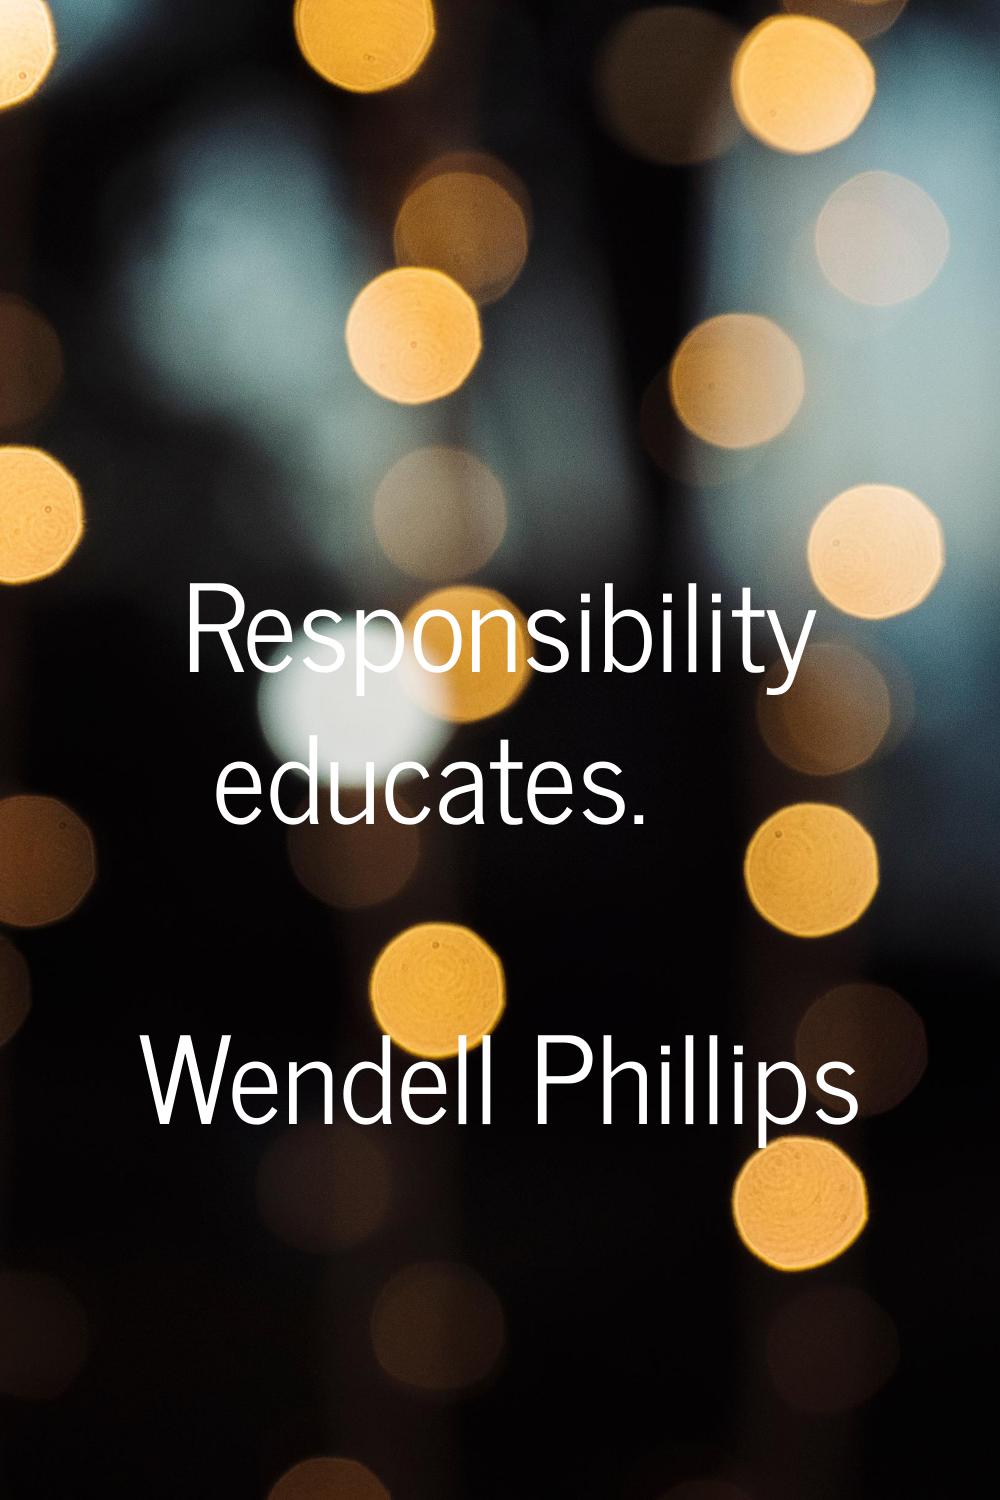 Responsibility educates.